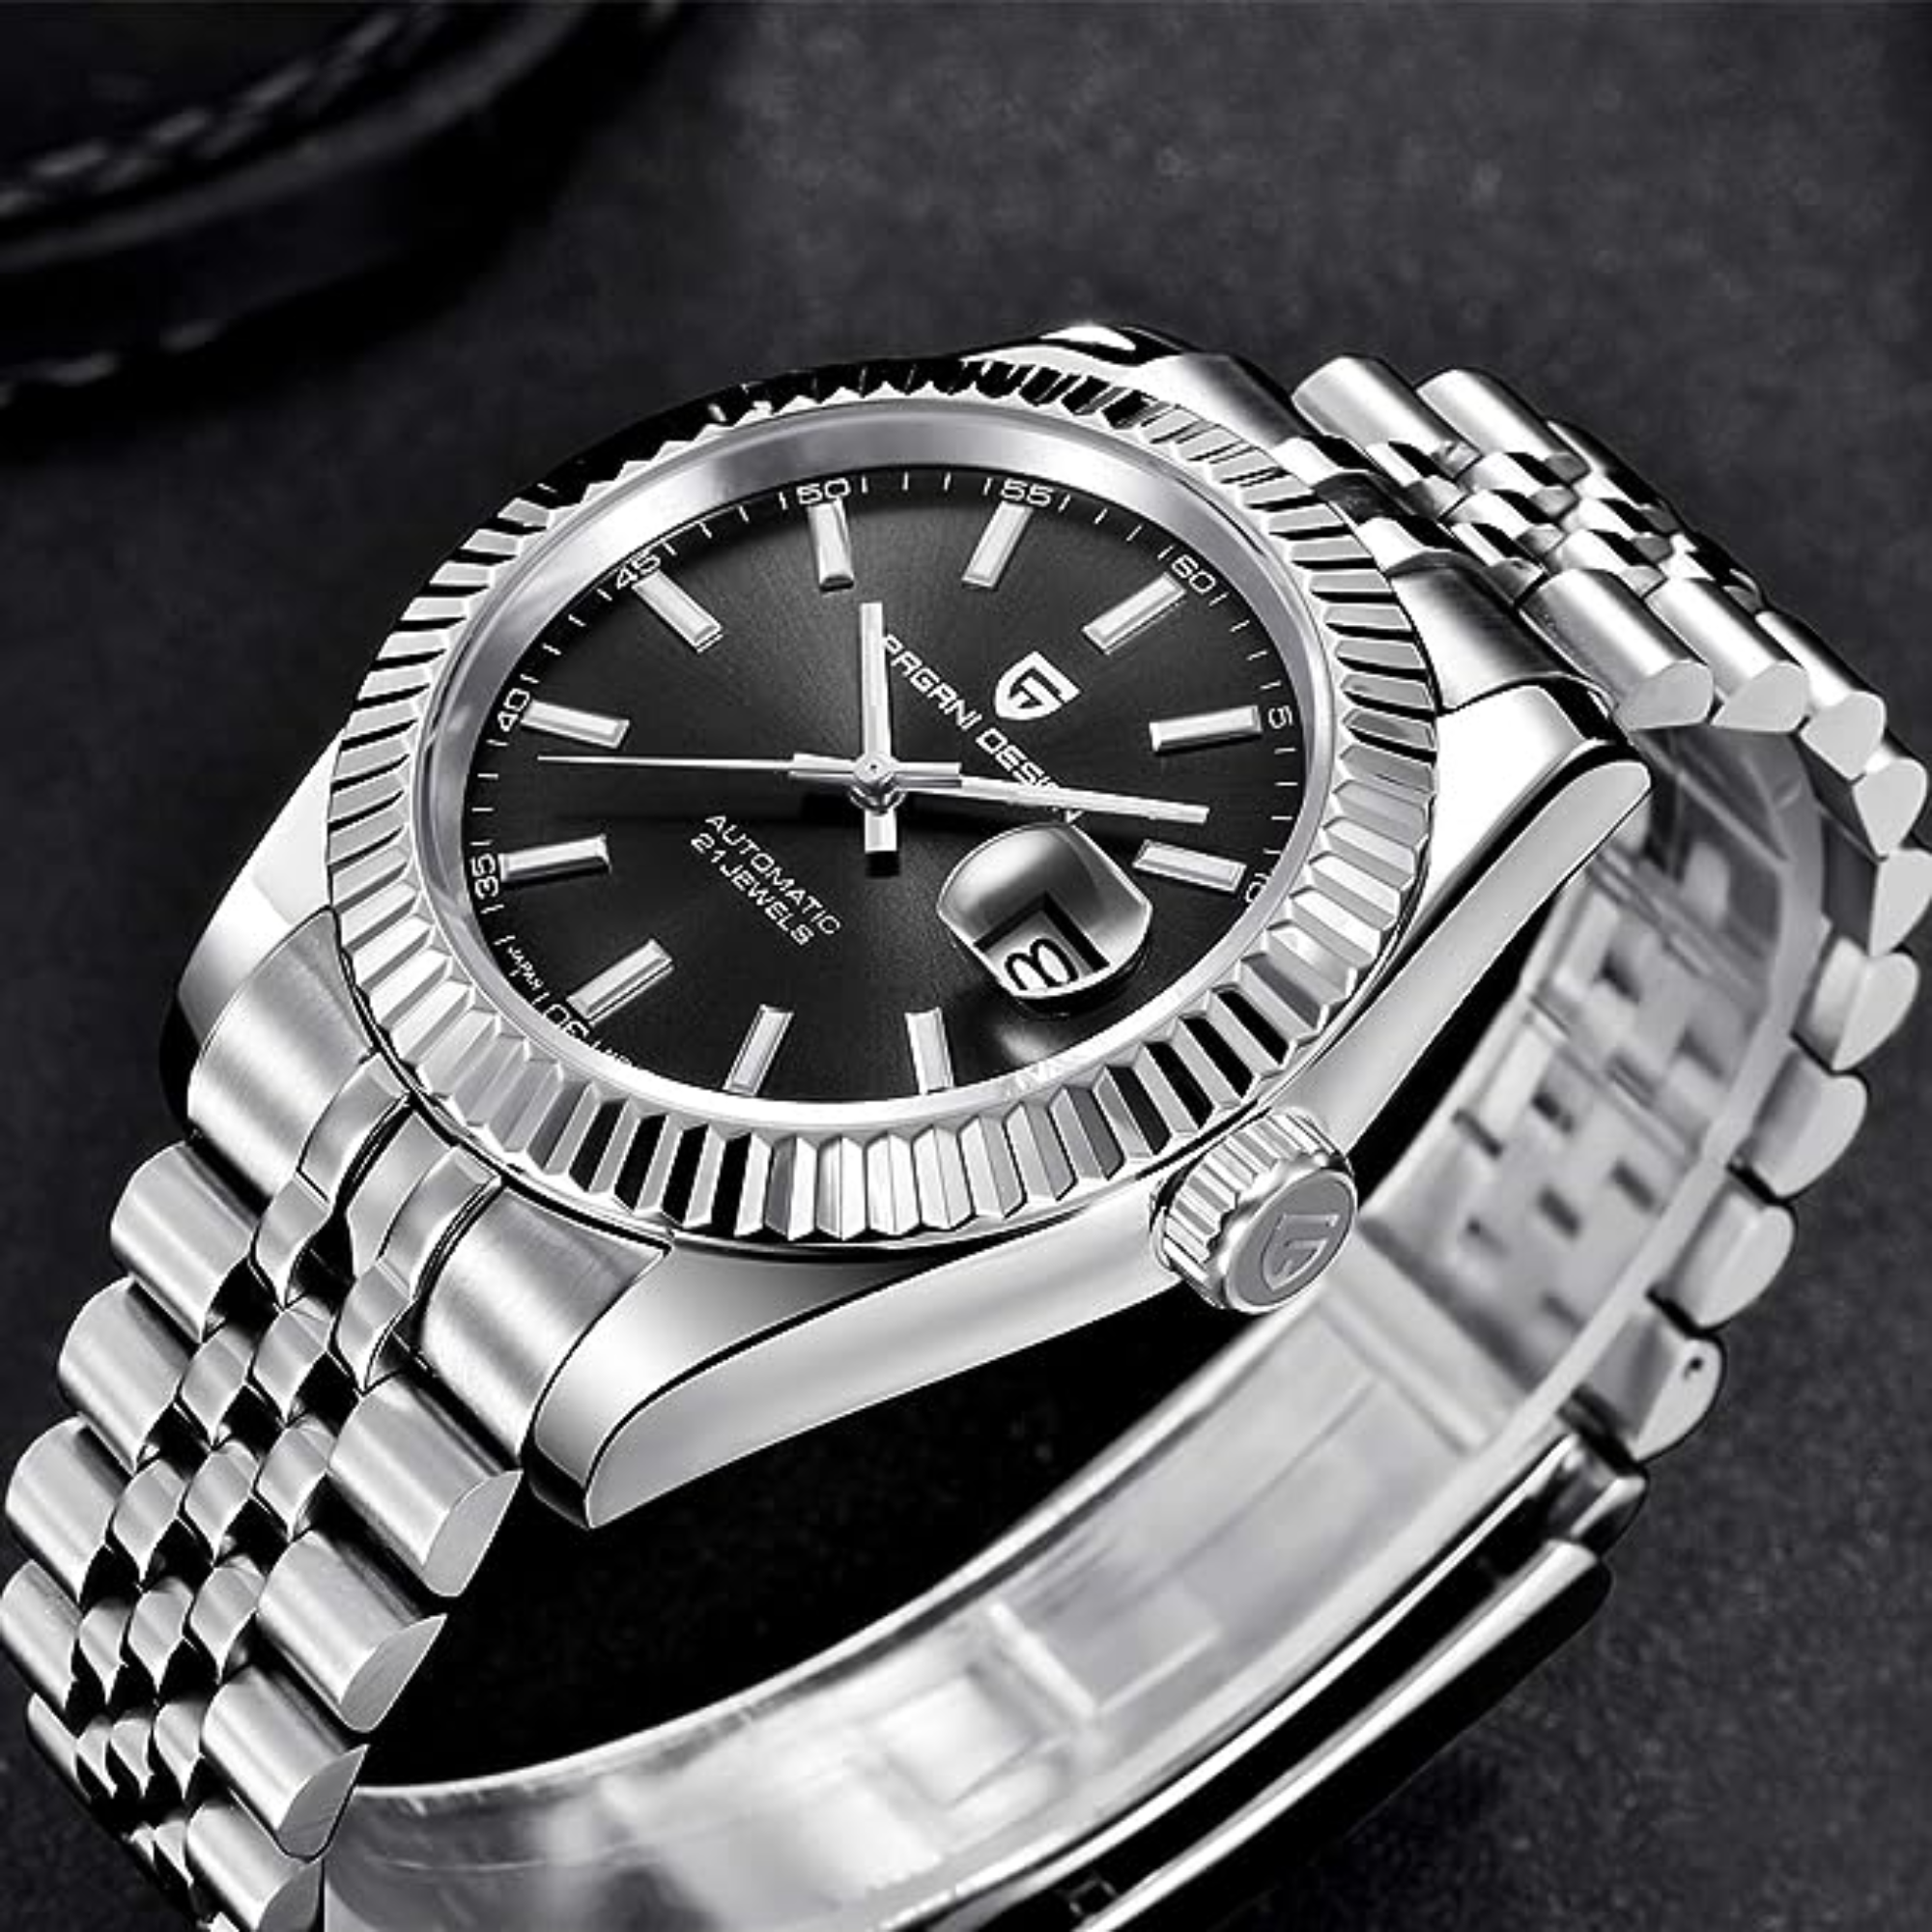 Pagani Design PD-1645 DateJust (Seiko NH-35A Automatic Movement) Mechanical Watch 200M Waterproof Watch Stainless Steel Watch Fluted Bezel (Black Dial - Jubilee Bracelet)